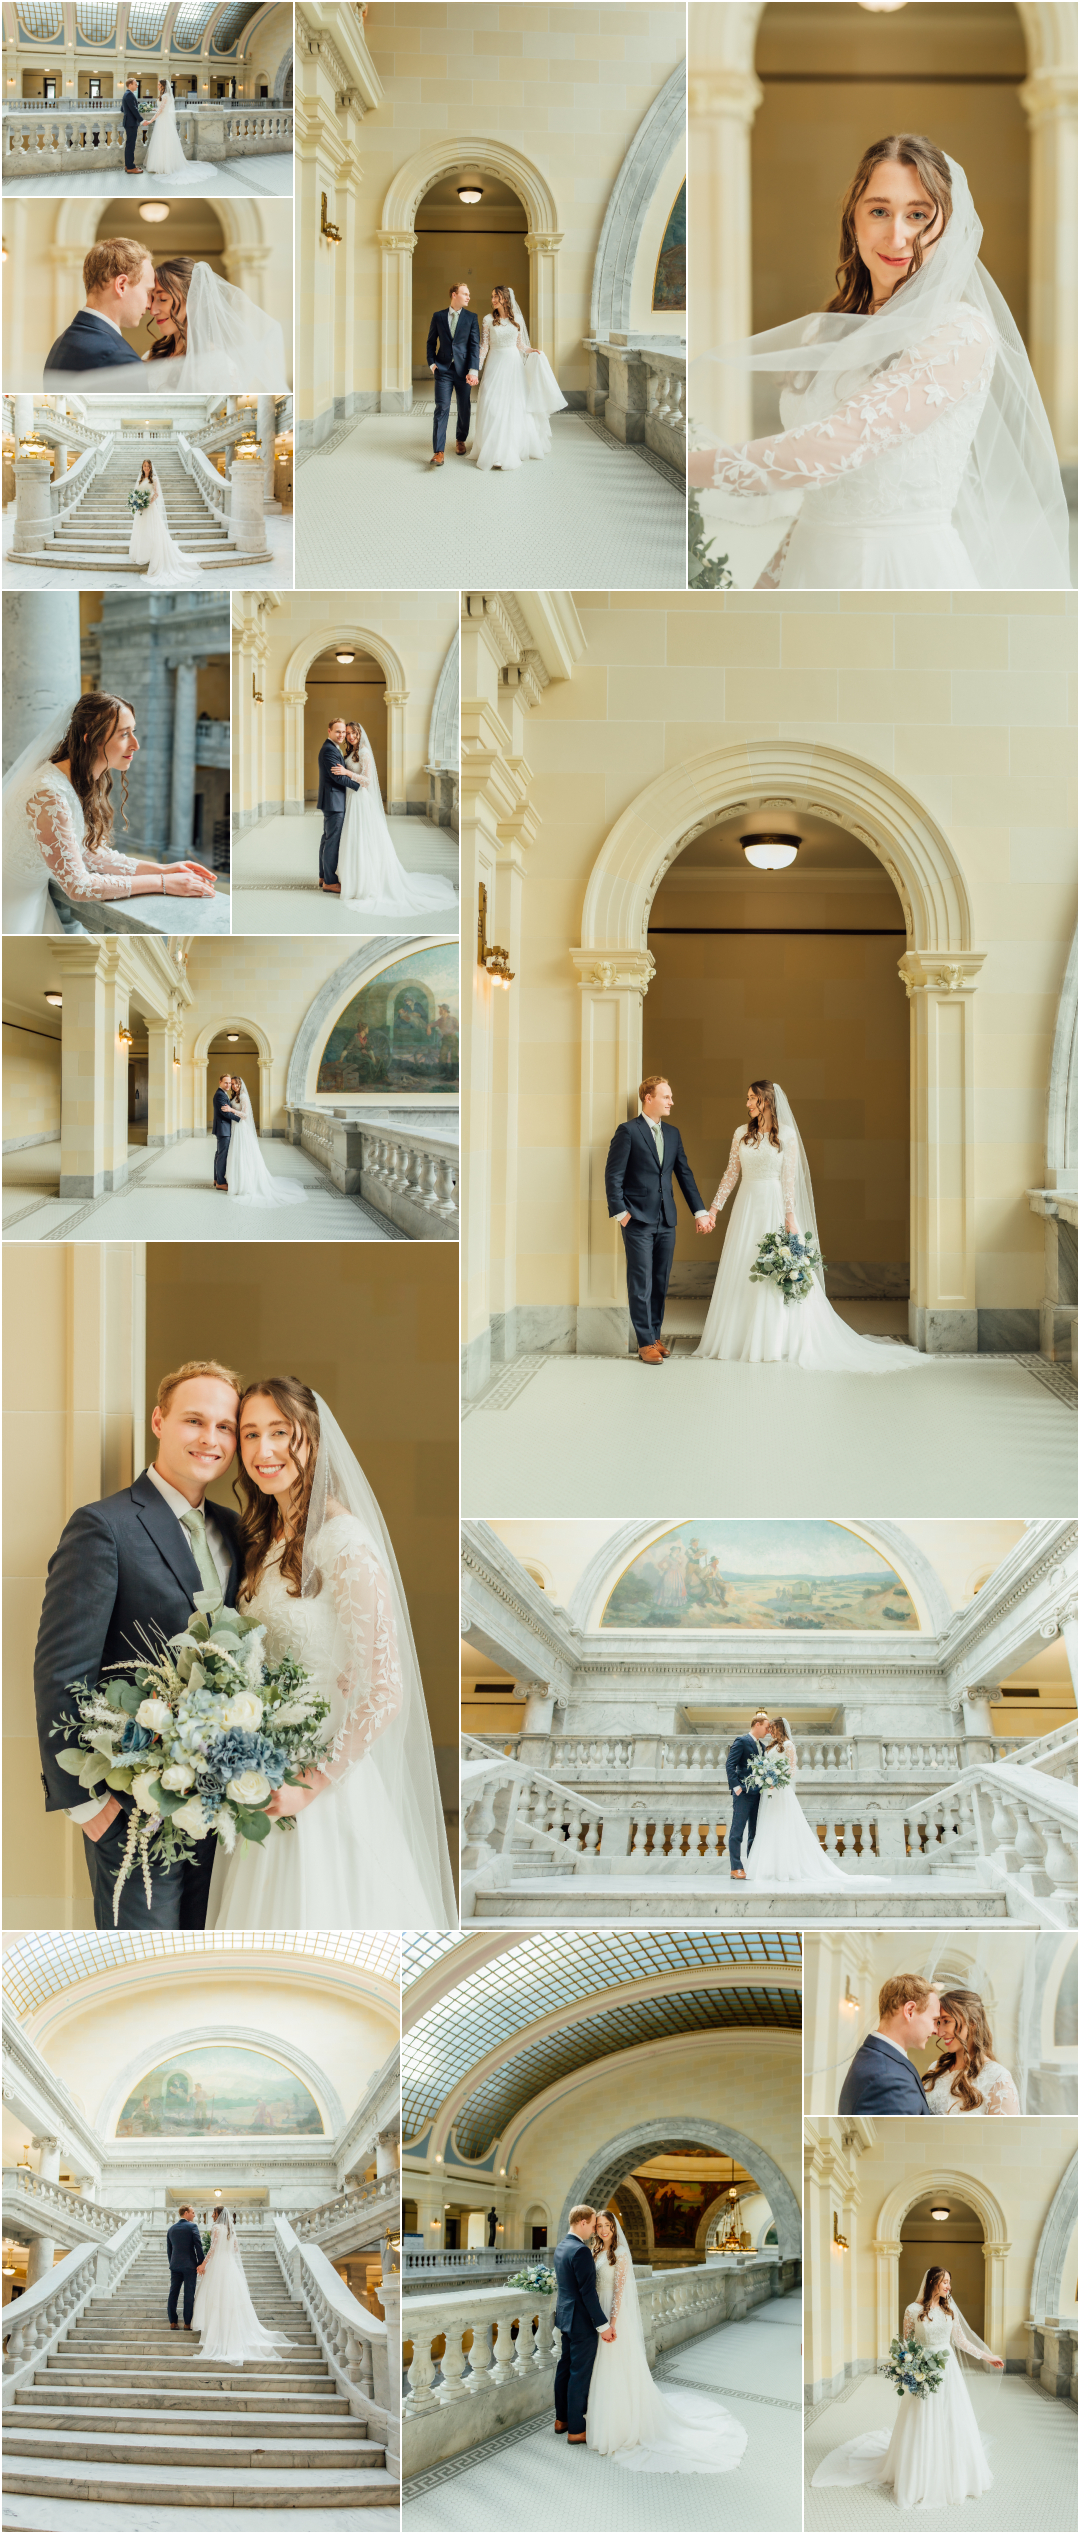 Utah State Capitol Building Bridals - Indoor Winter Bridal Photography